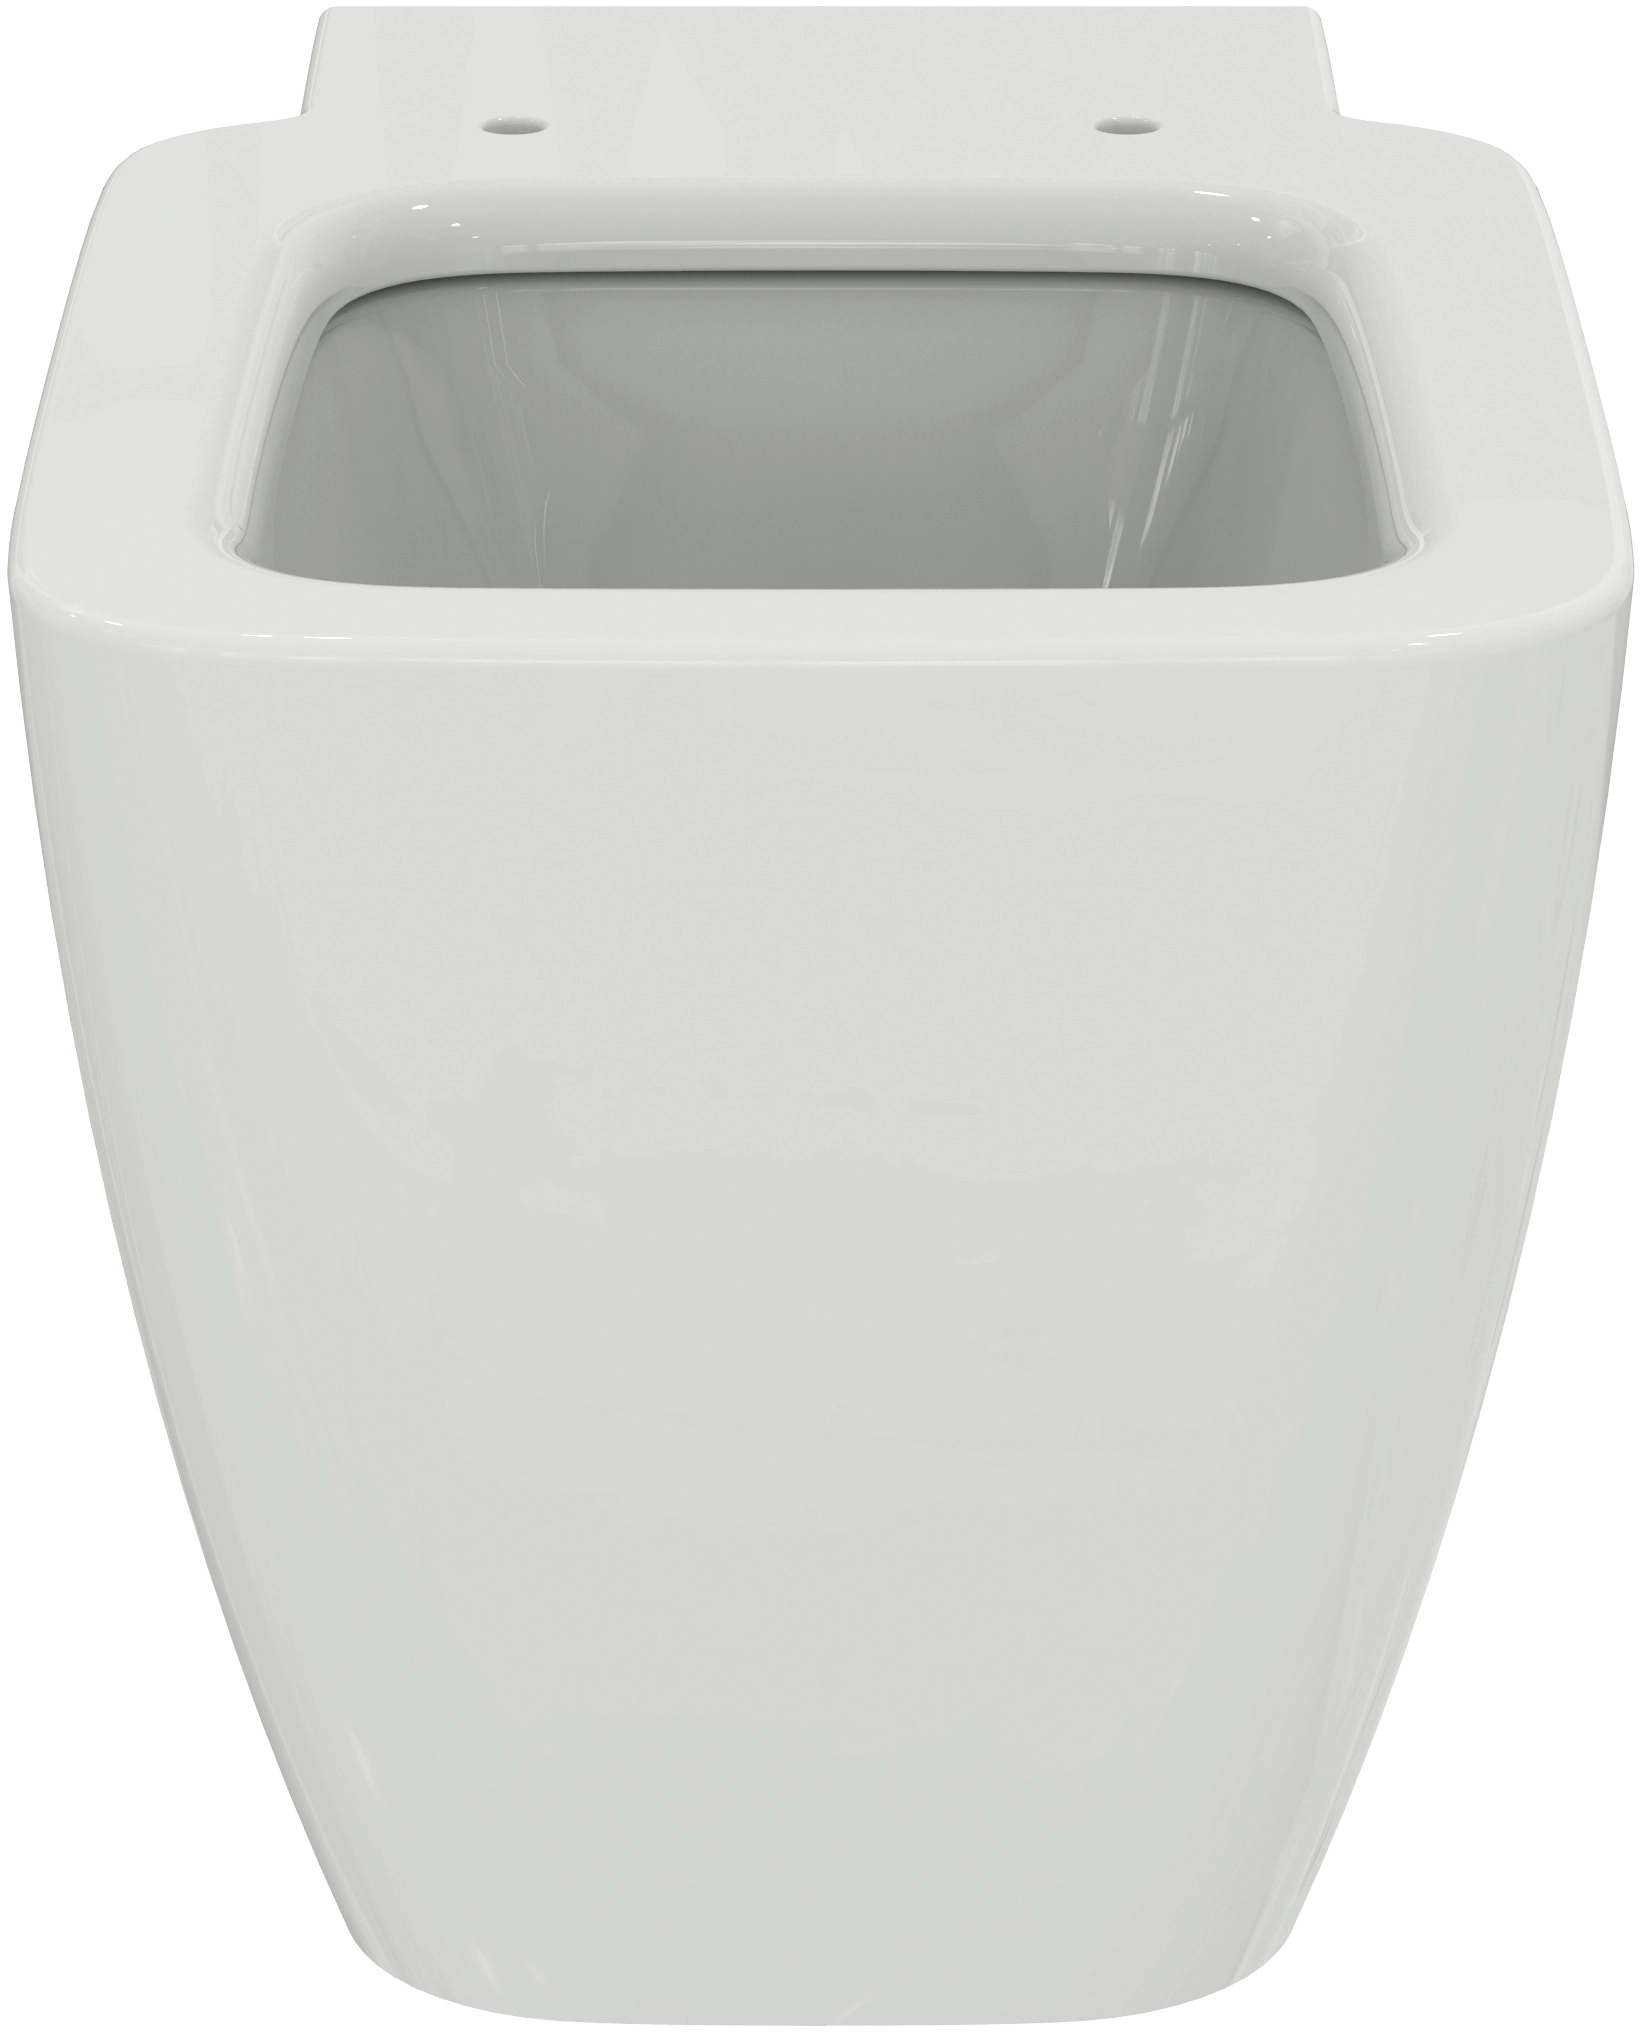 Ideal Standard Stand-WC Weiß bei Strada OBI kaufen Tiefspüler II AquaBlade Spülrandlos